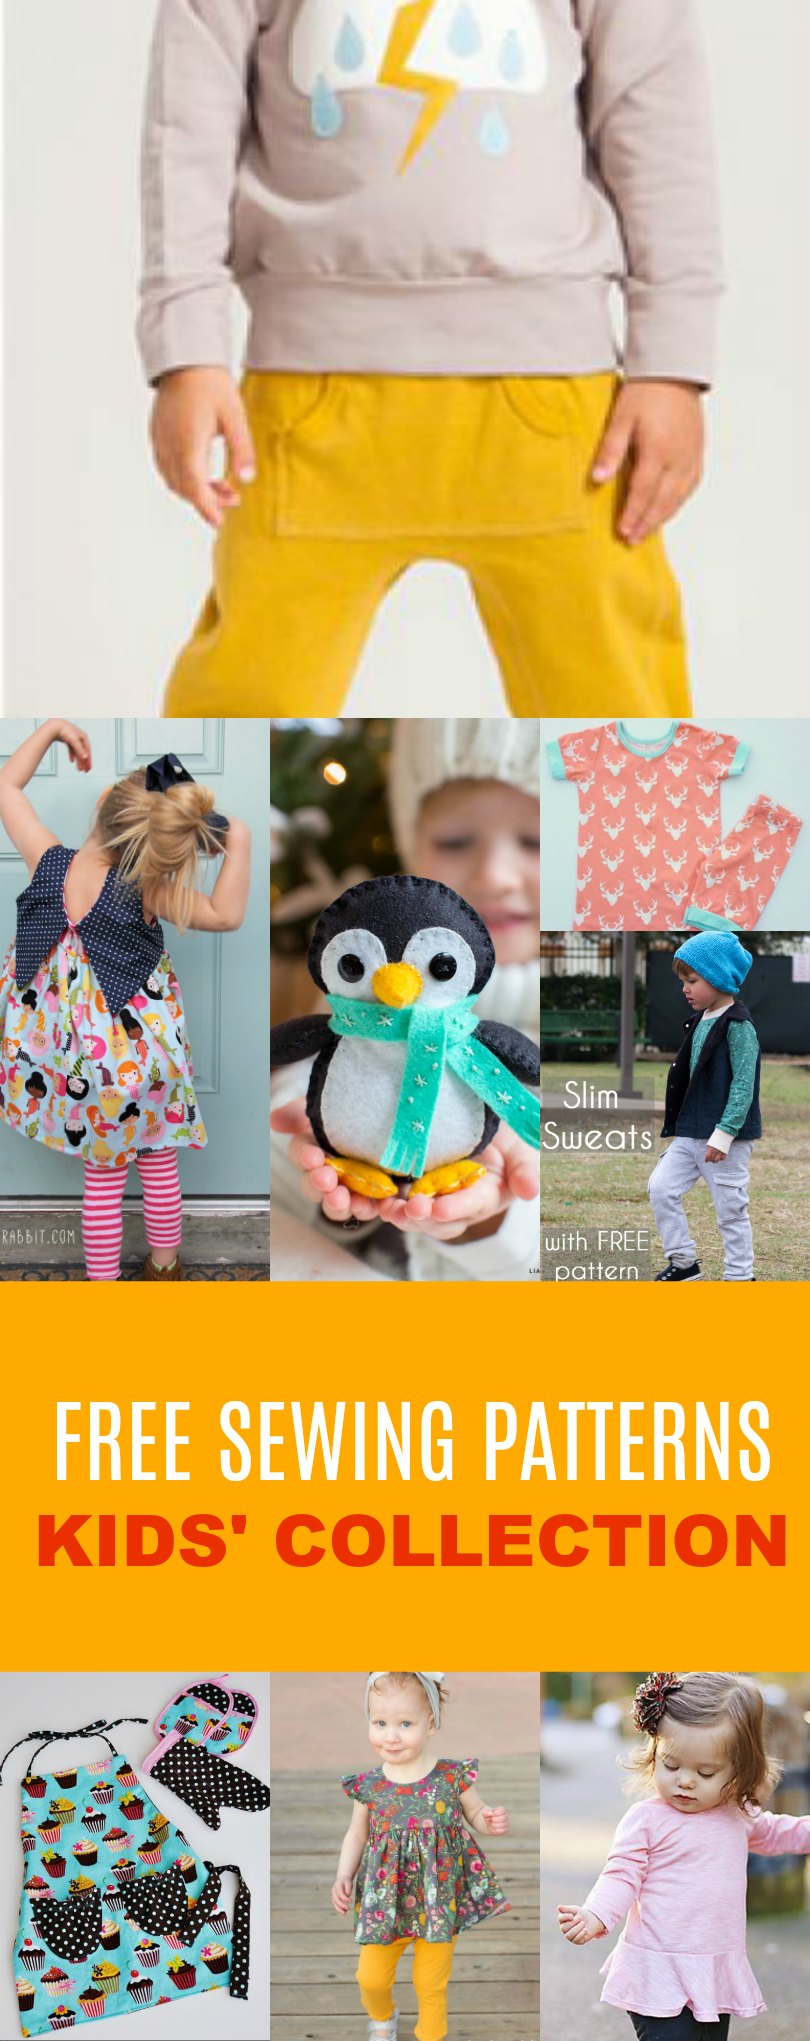 free-sewing-patterns-kids-pattern-collection-free-sewing-patterns